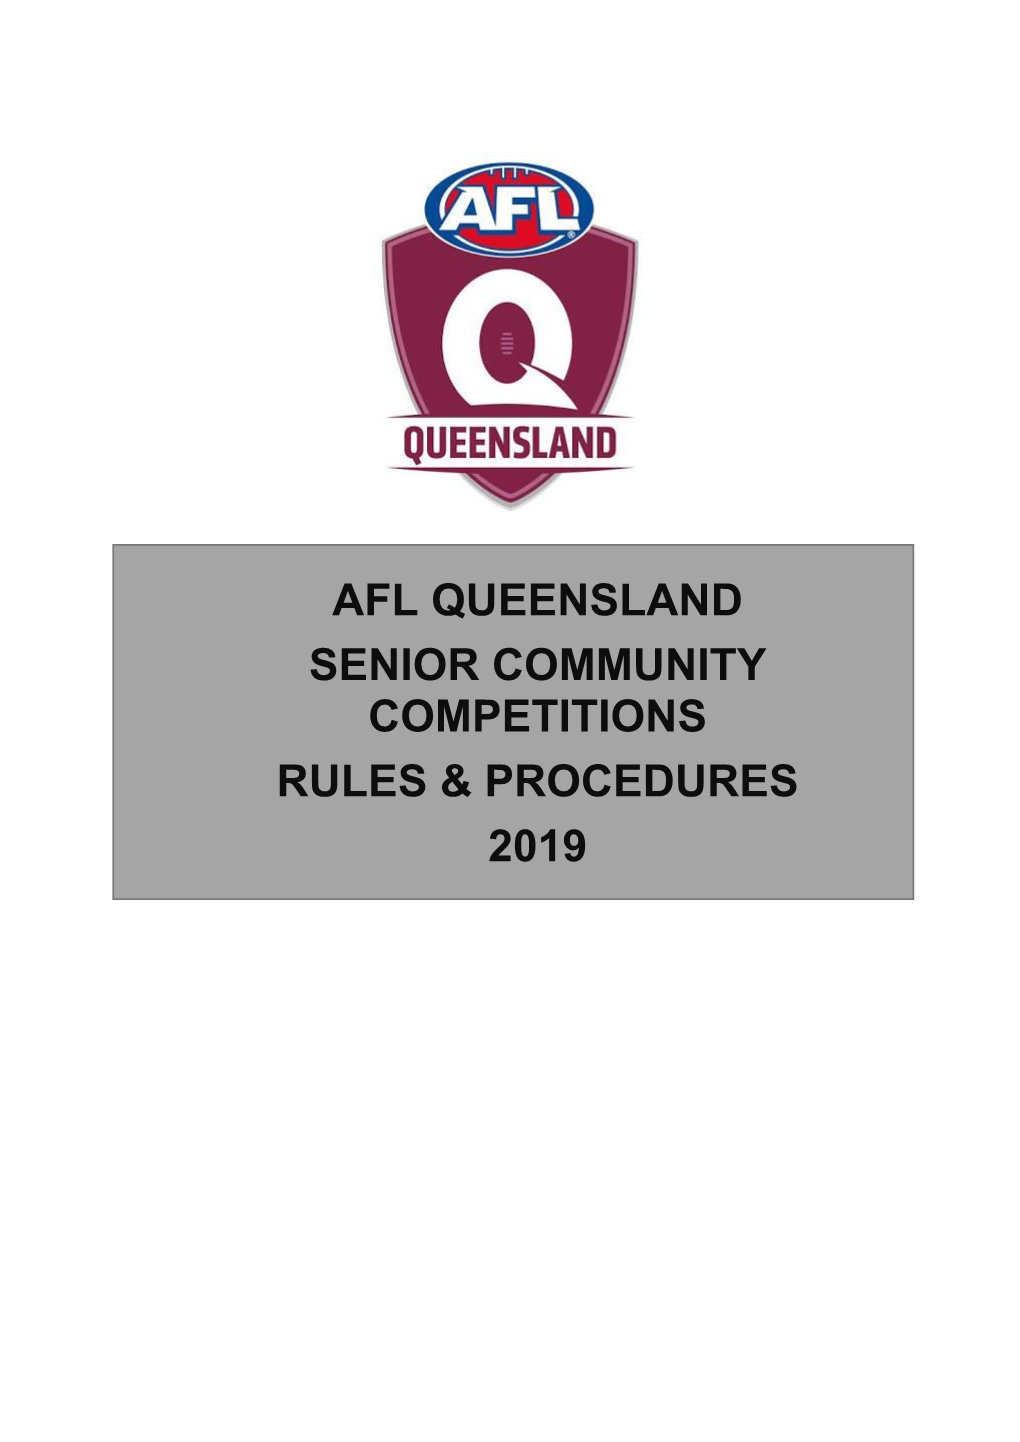 Afl Queensland Senior Community Competitions Rules & Procedures